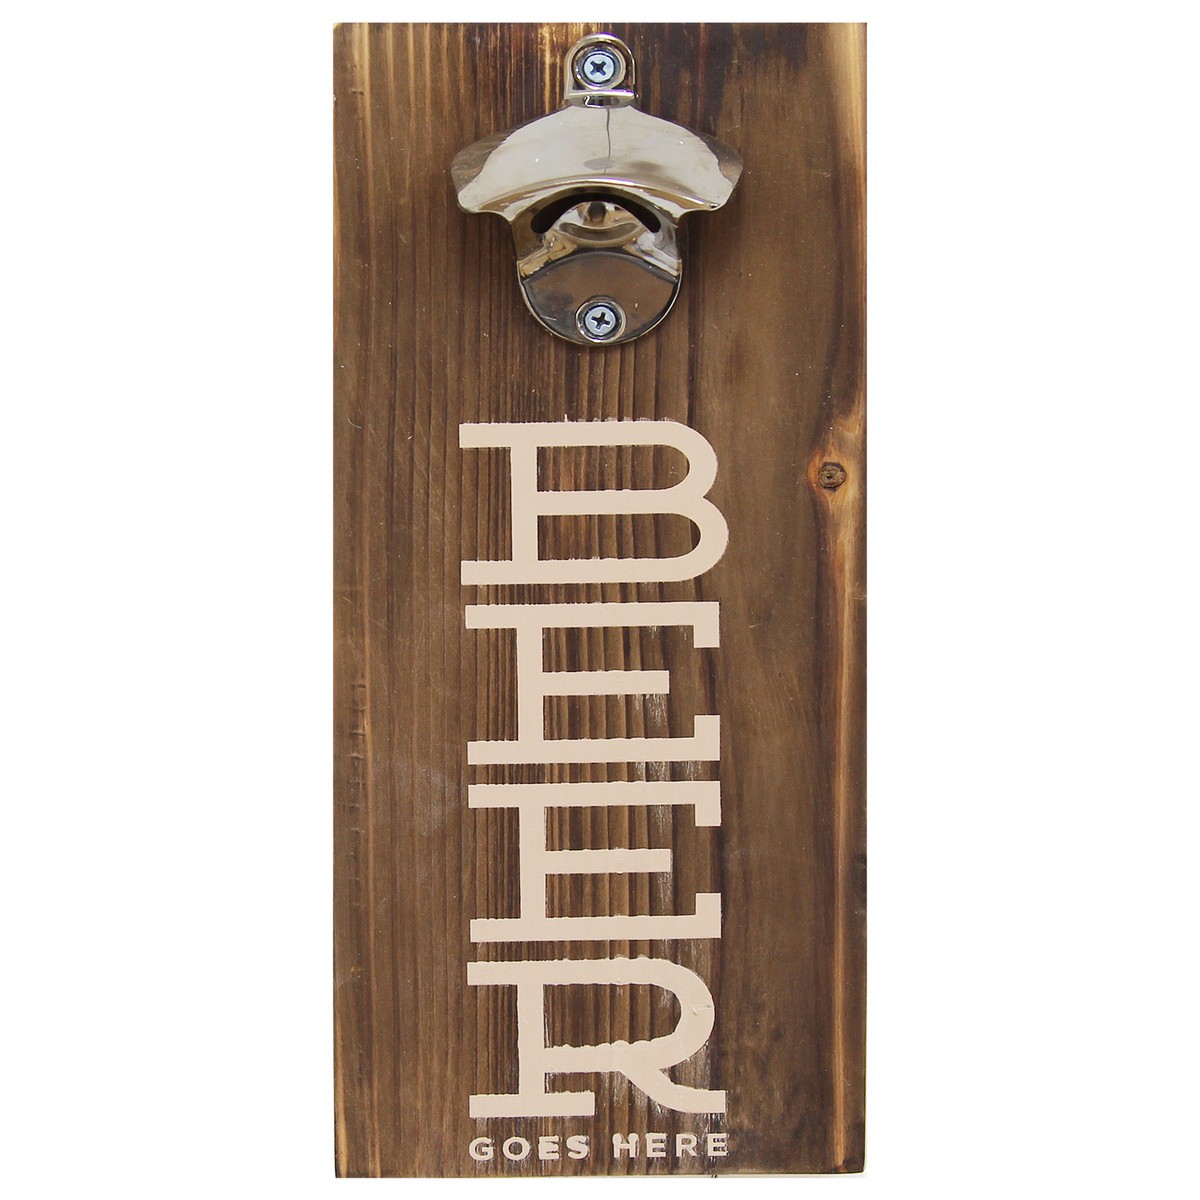 Stratton Home Decor Beer Bottle Opener Wall Decor - Dark Natural Wood